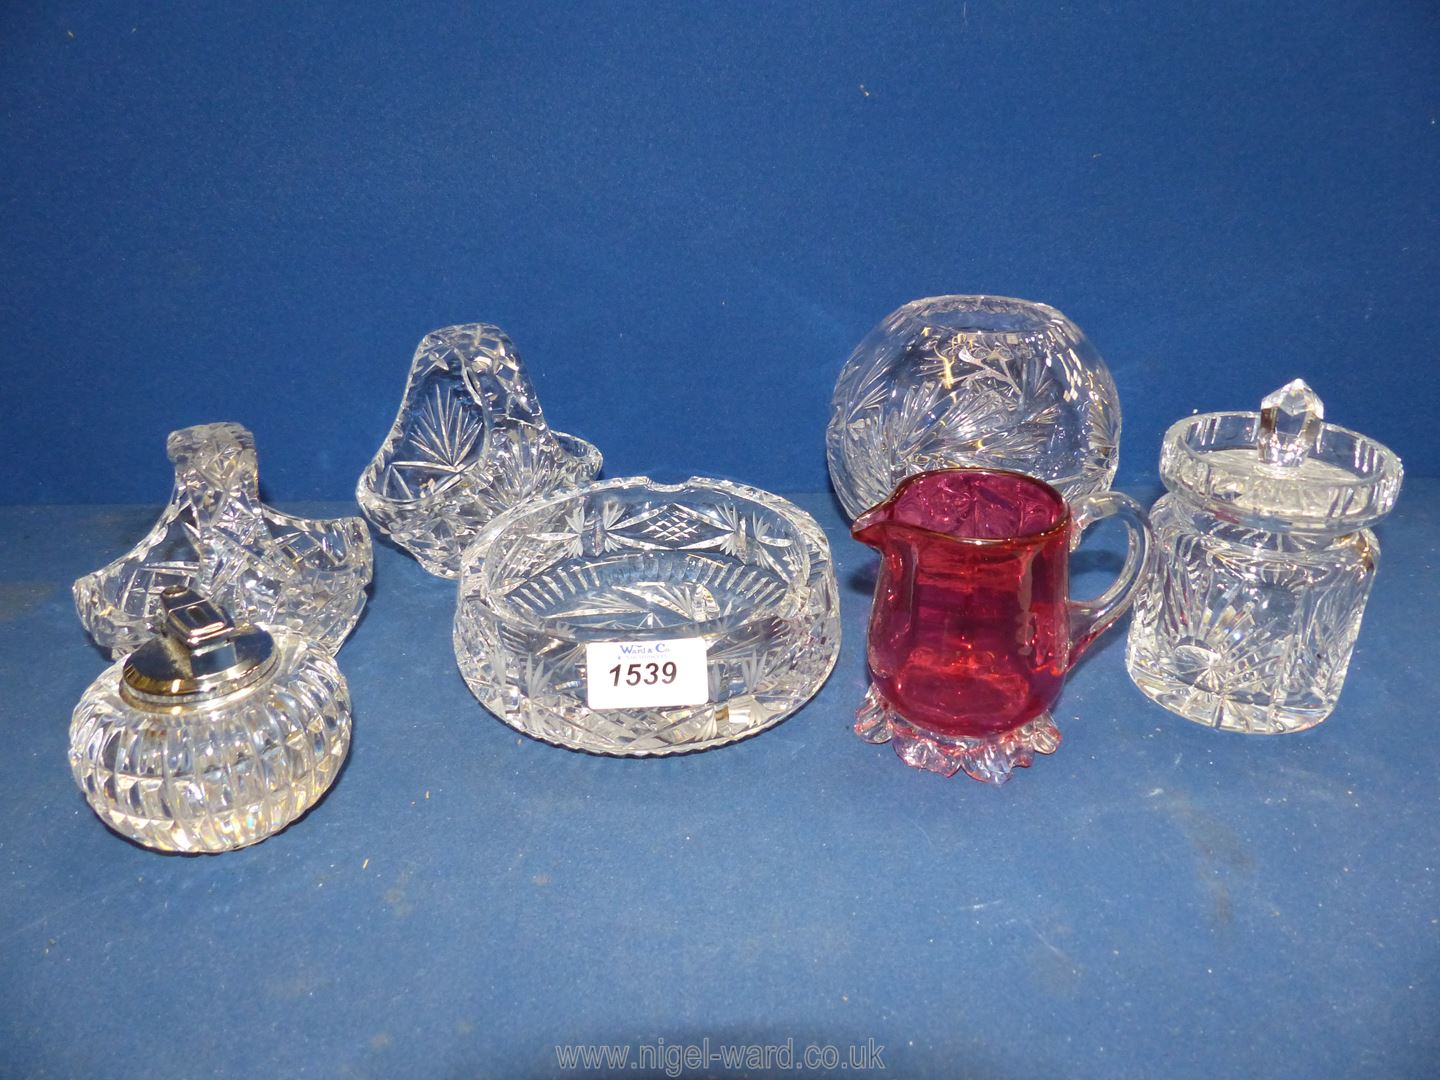 A quantity of cut glass including ashtray, rose bowl, flower baskets, preserve pot etc.